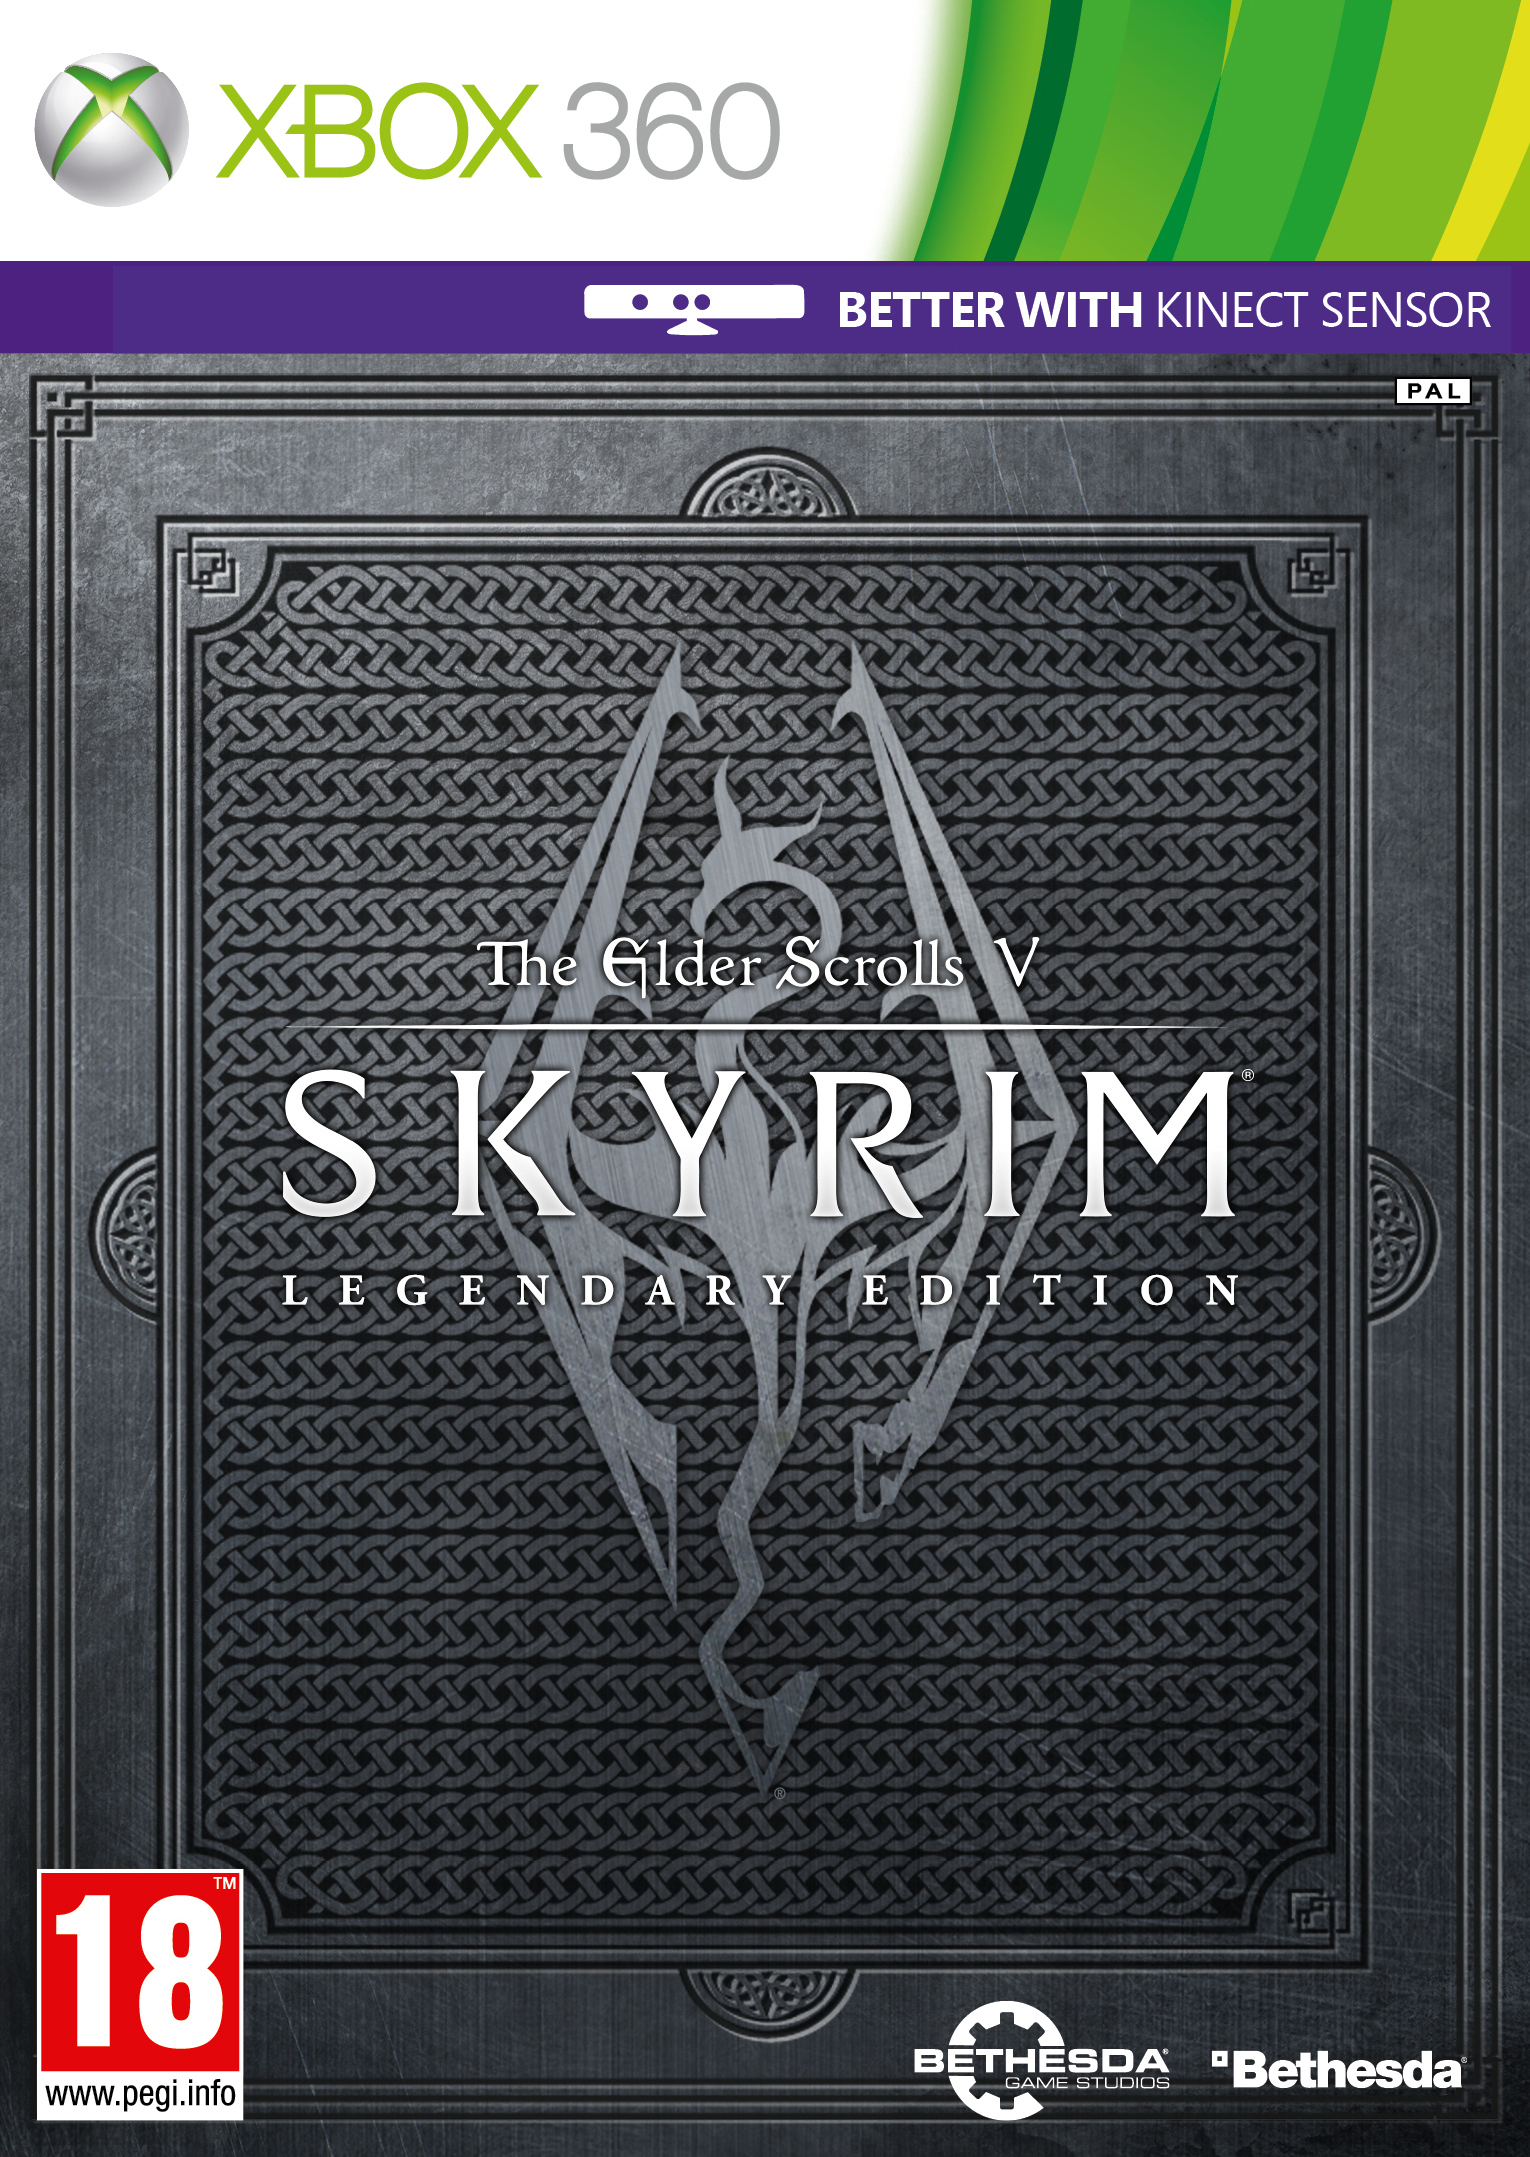 The Elder Scrolls V: Skyrim Special Edition instal the new version for windows